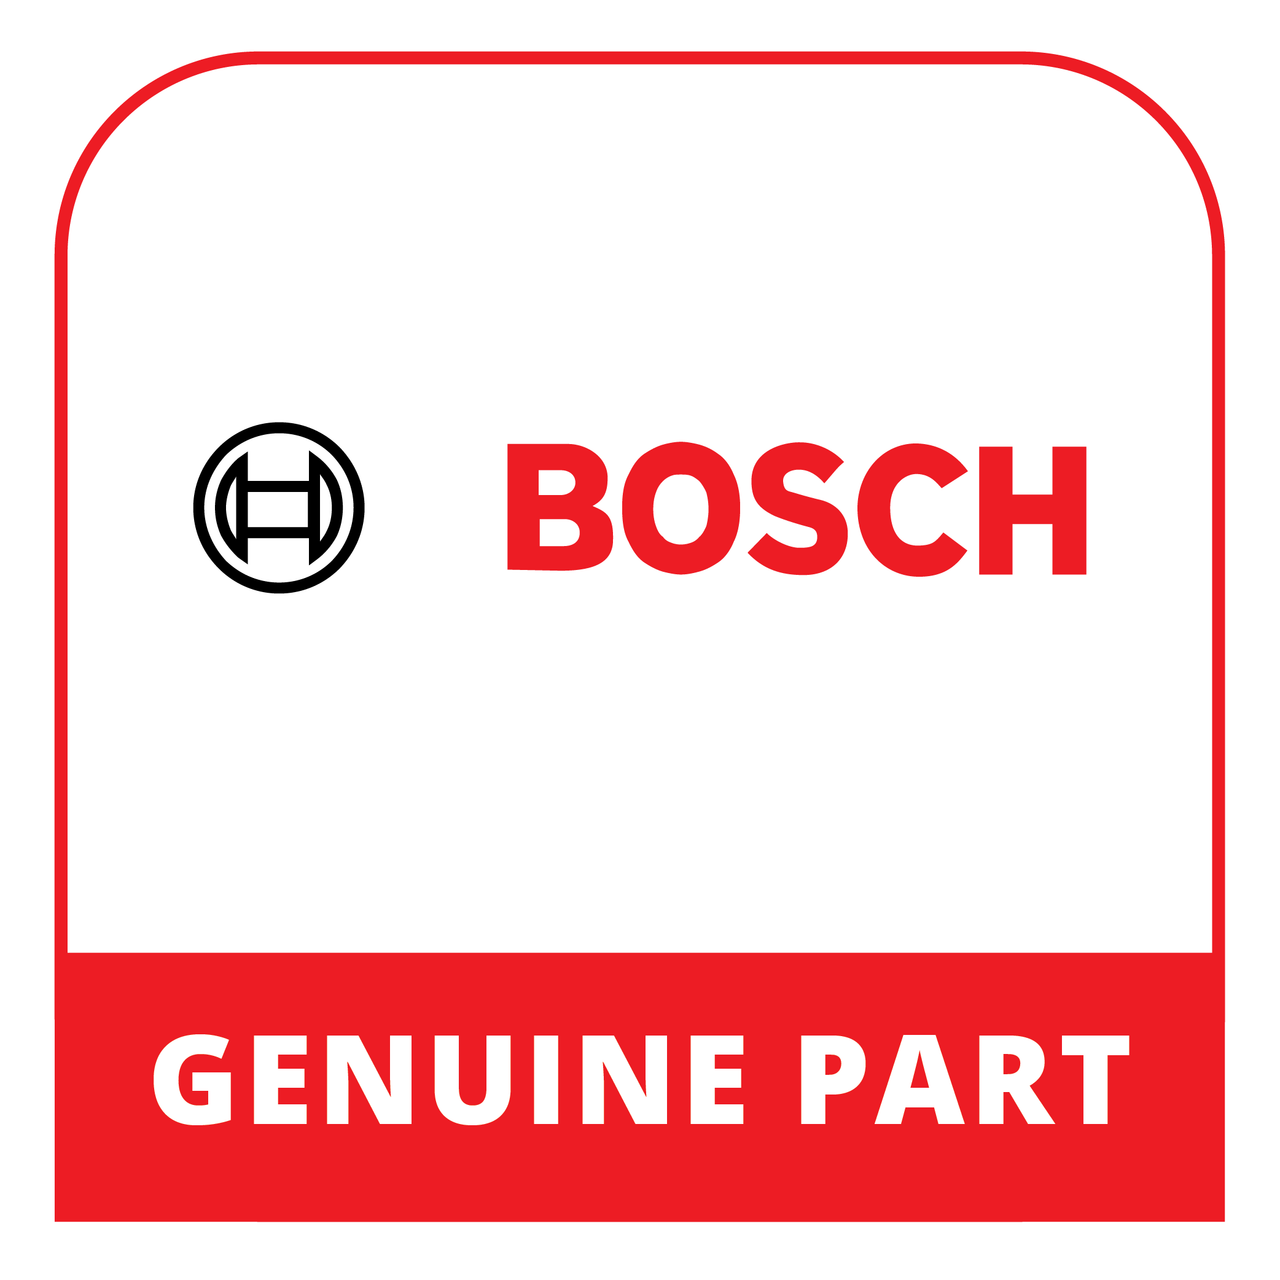 Bosch (Thermador) 10028573 - Smm Programmed - Genuine Bosch (Thermador) Part